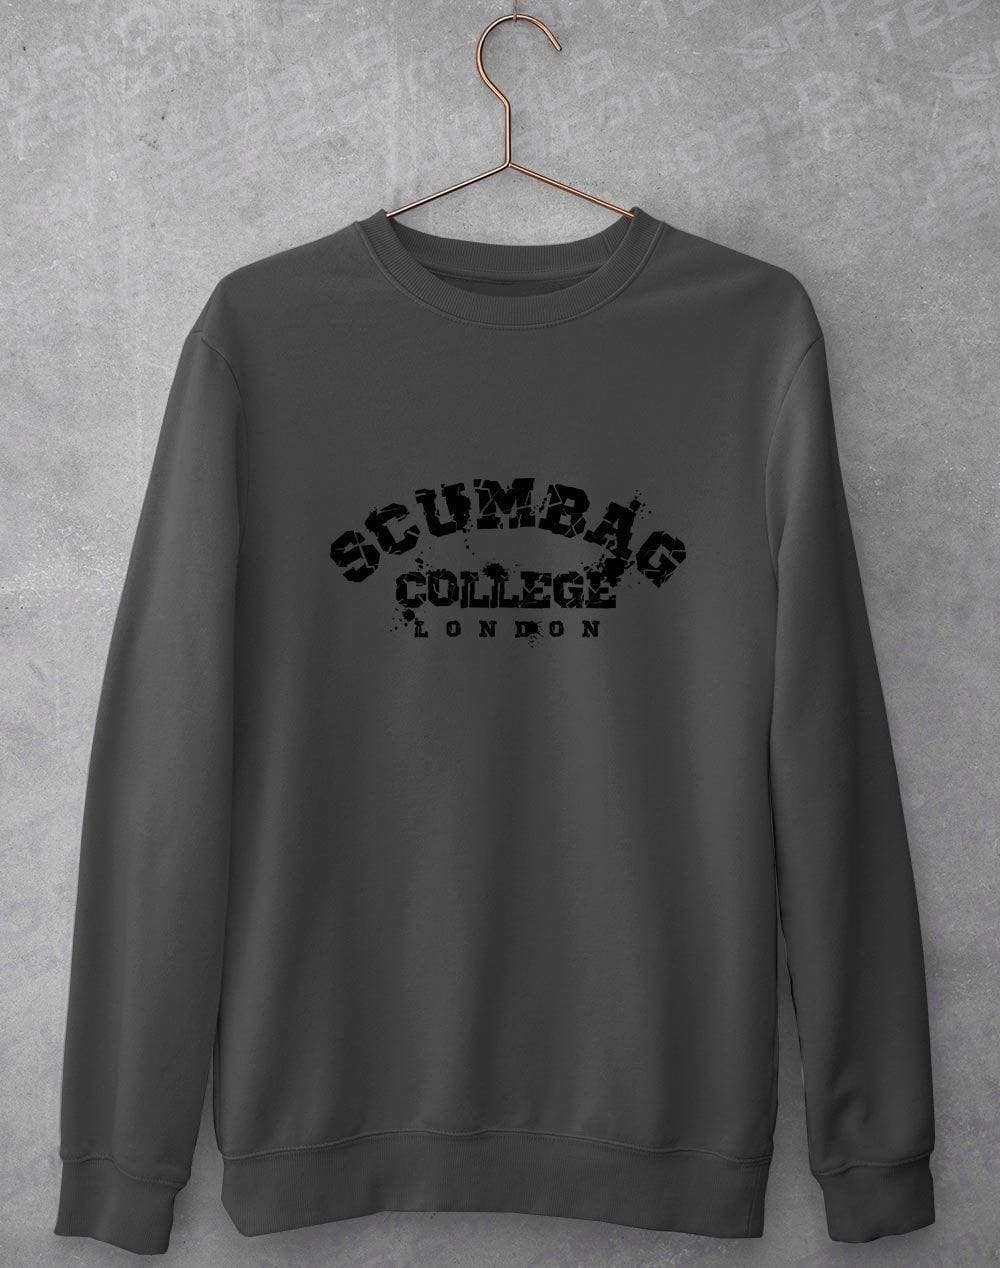 Scumbag College Sweatshirt S / Charcoal  - Off World Tees